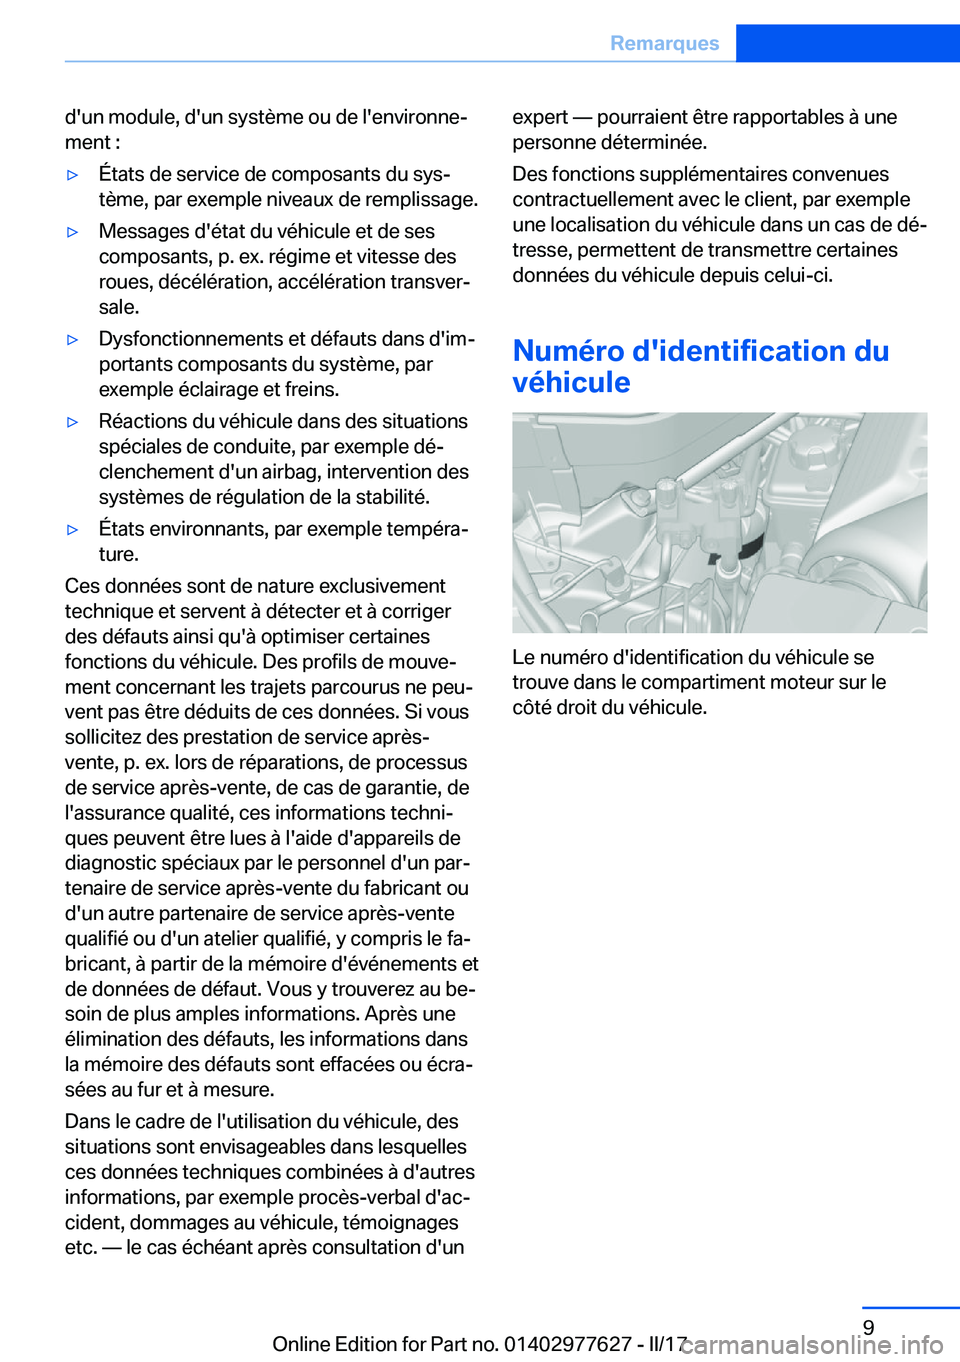 BMW X6 2017  Notices Demploi (in French) �d�'�u�n� �m�o�d�u�l�e�,� �d�'�u�n� �s�y�s�t�è�m�e� �o�u� �d�e� �l�'�e�n�v�i�r�o�n�n�ej�m�e�n�t� �:'y�É�t�a�t�s� �d�e� �s�e�r�v�i�c�e� �d�e� �c�o�m�p�o�s�a�n�t�s� �d�u� �s�y�sj
�t�